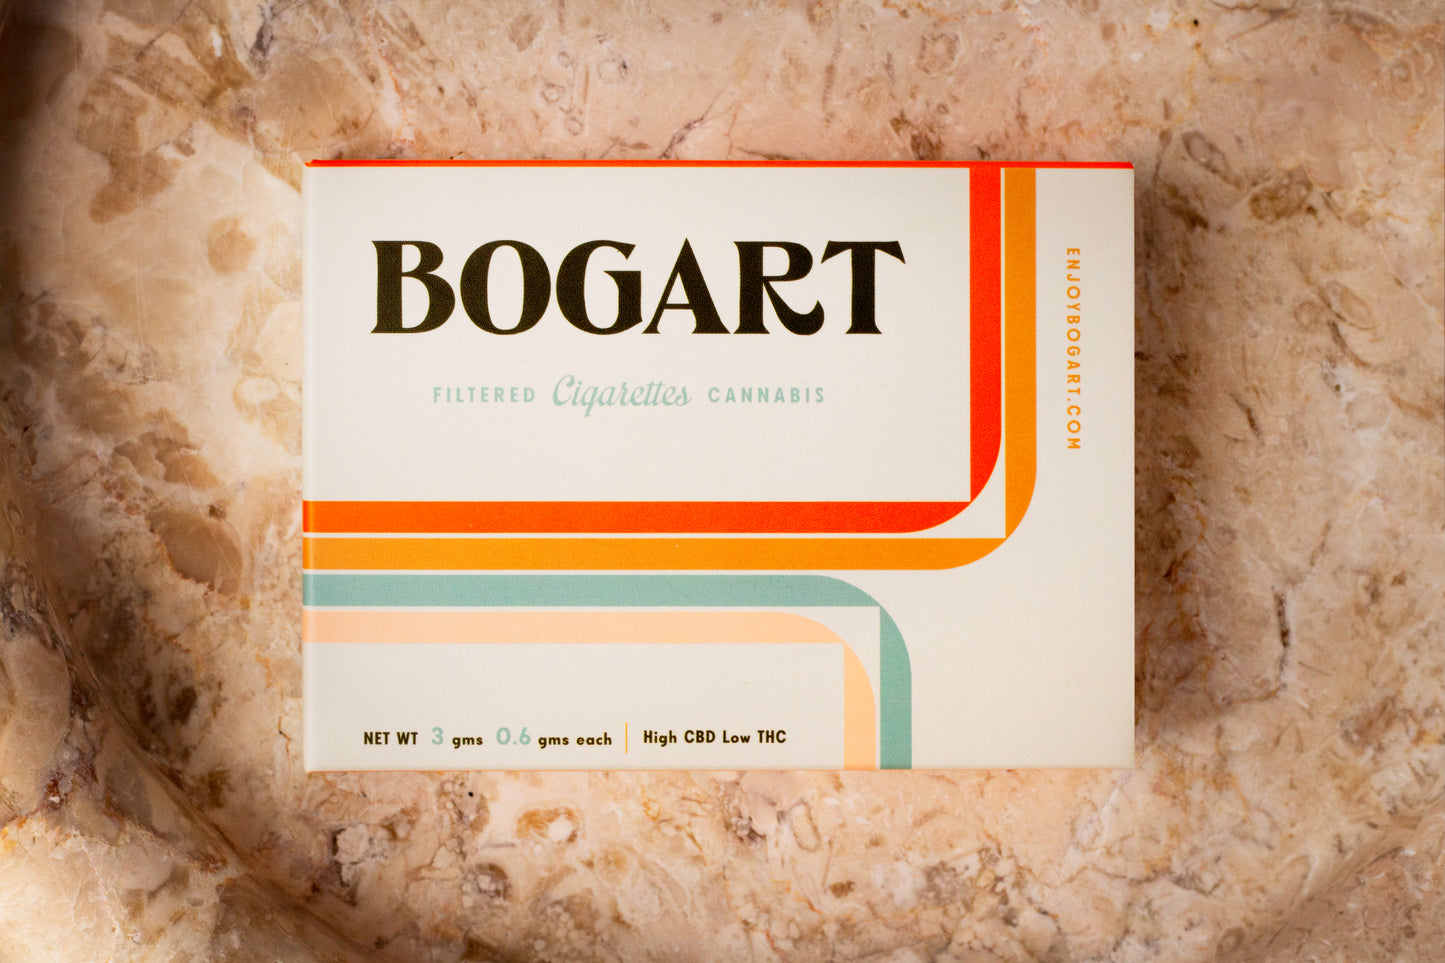 A pack of BOGARTS